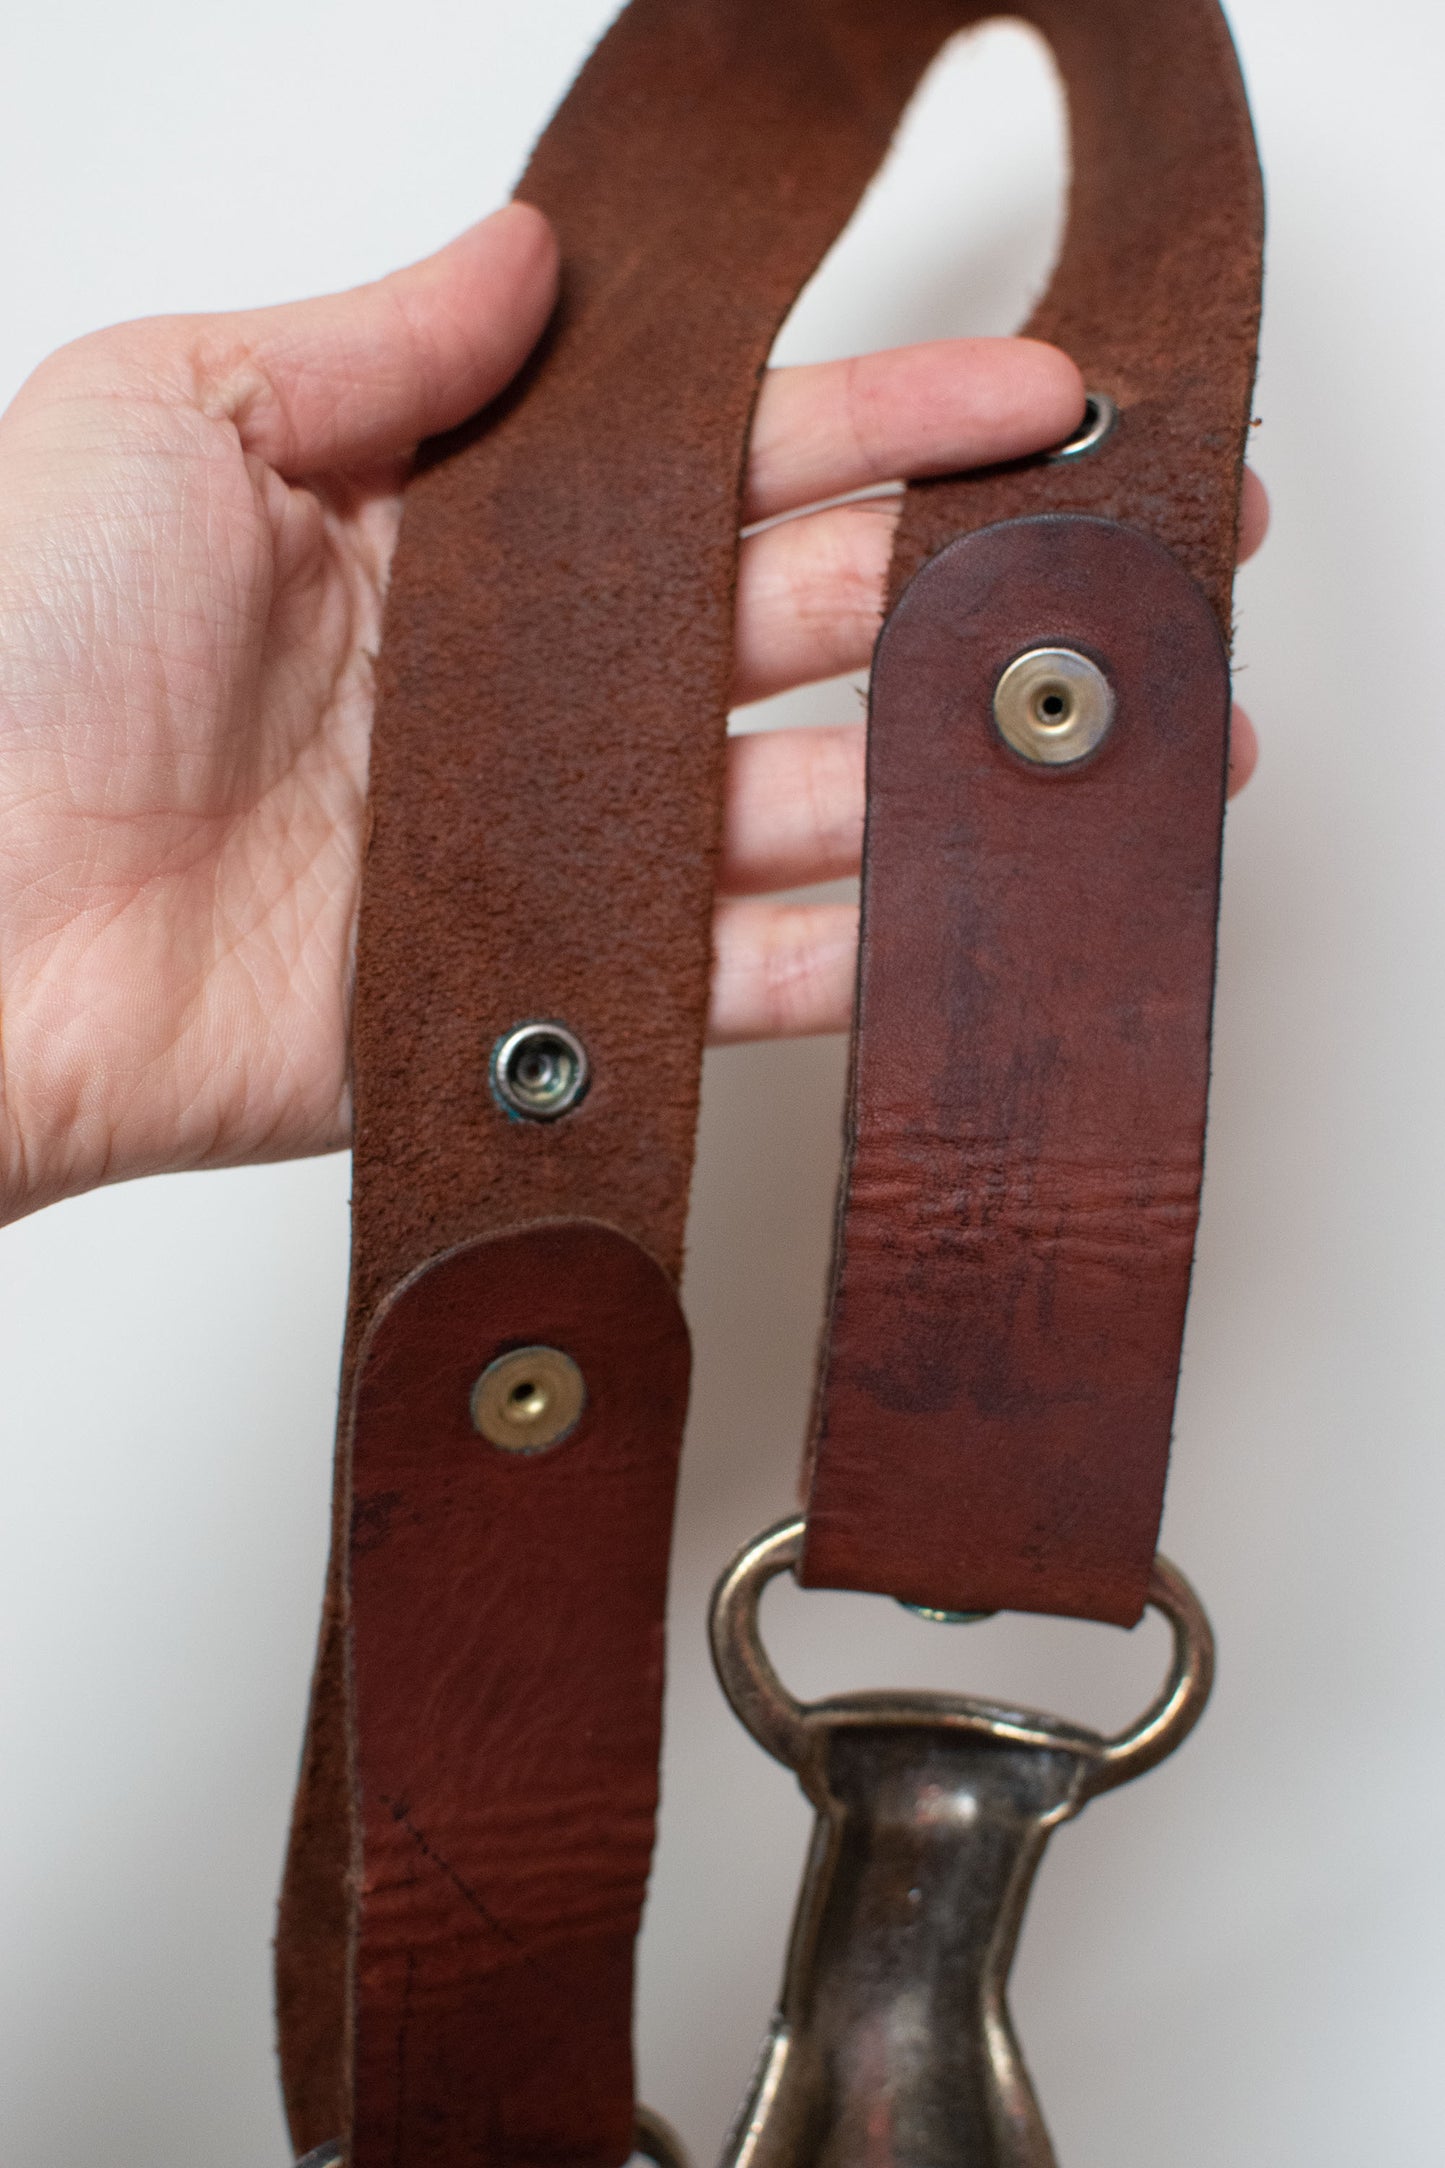 1970s Clasped Hands Belt